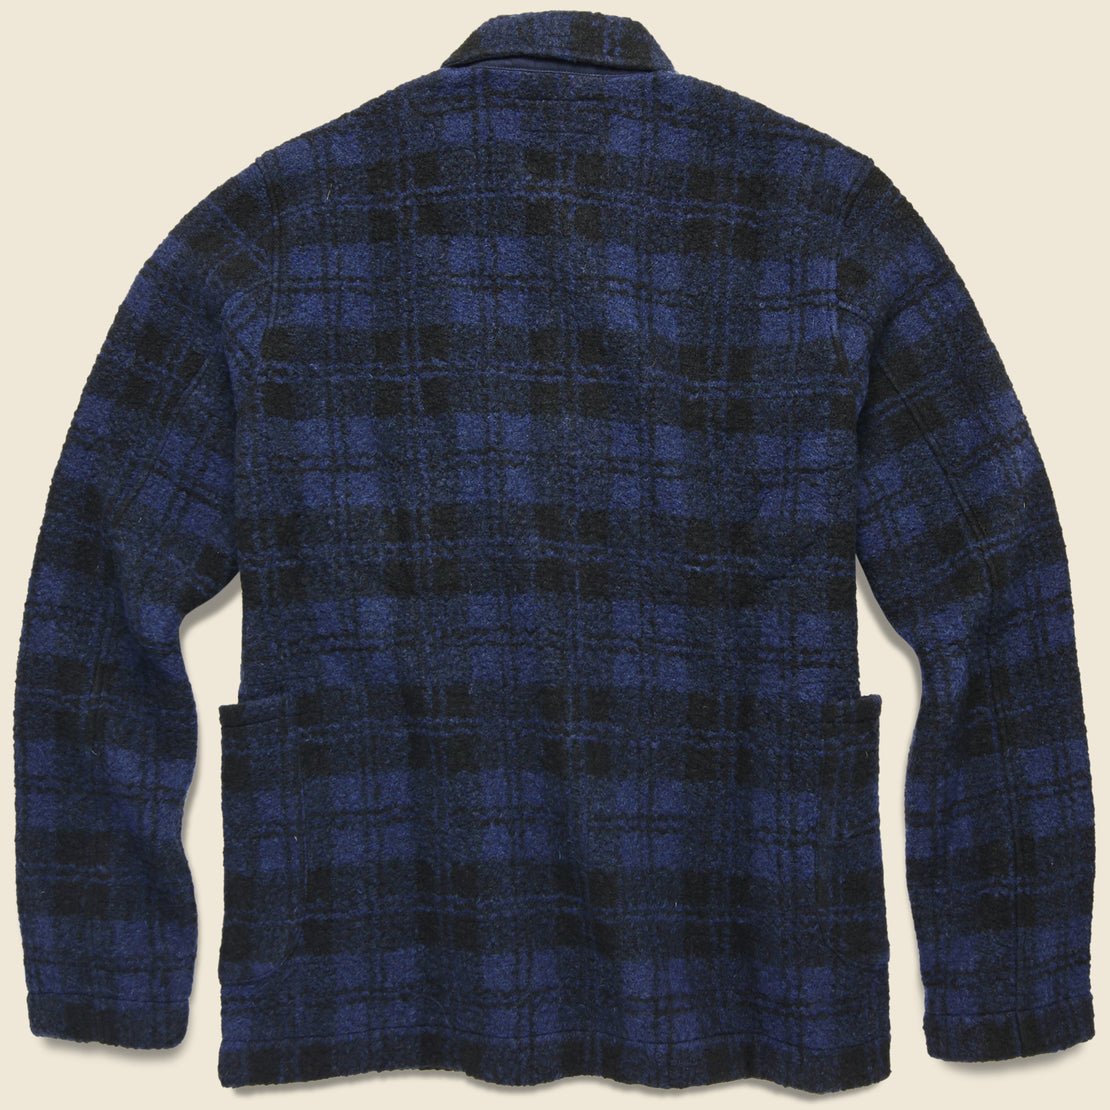 Lumber Fleece Wool Jacket - Navy - Universal Works - STAG Provisions - Outerwear - Coat / Jacket